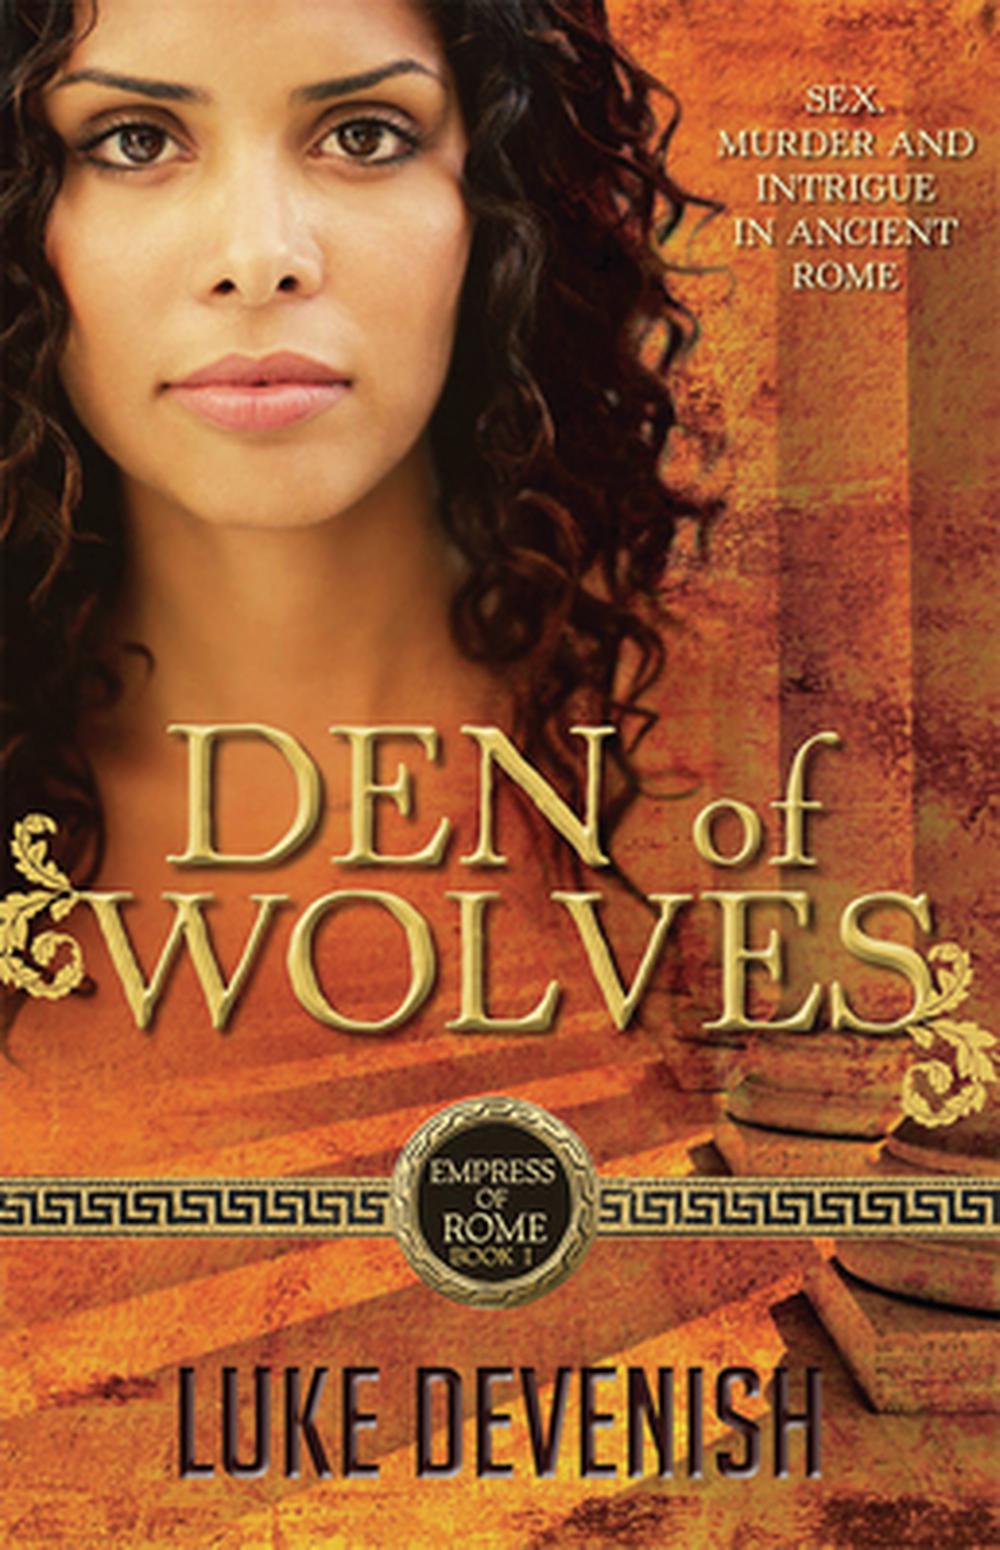 Den of Wolves by Juliet Marillier